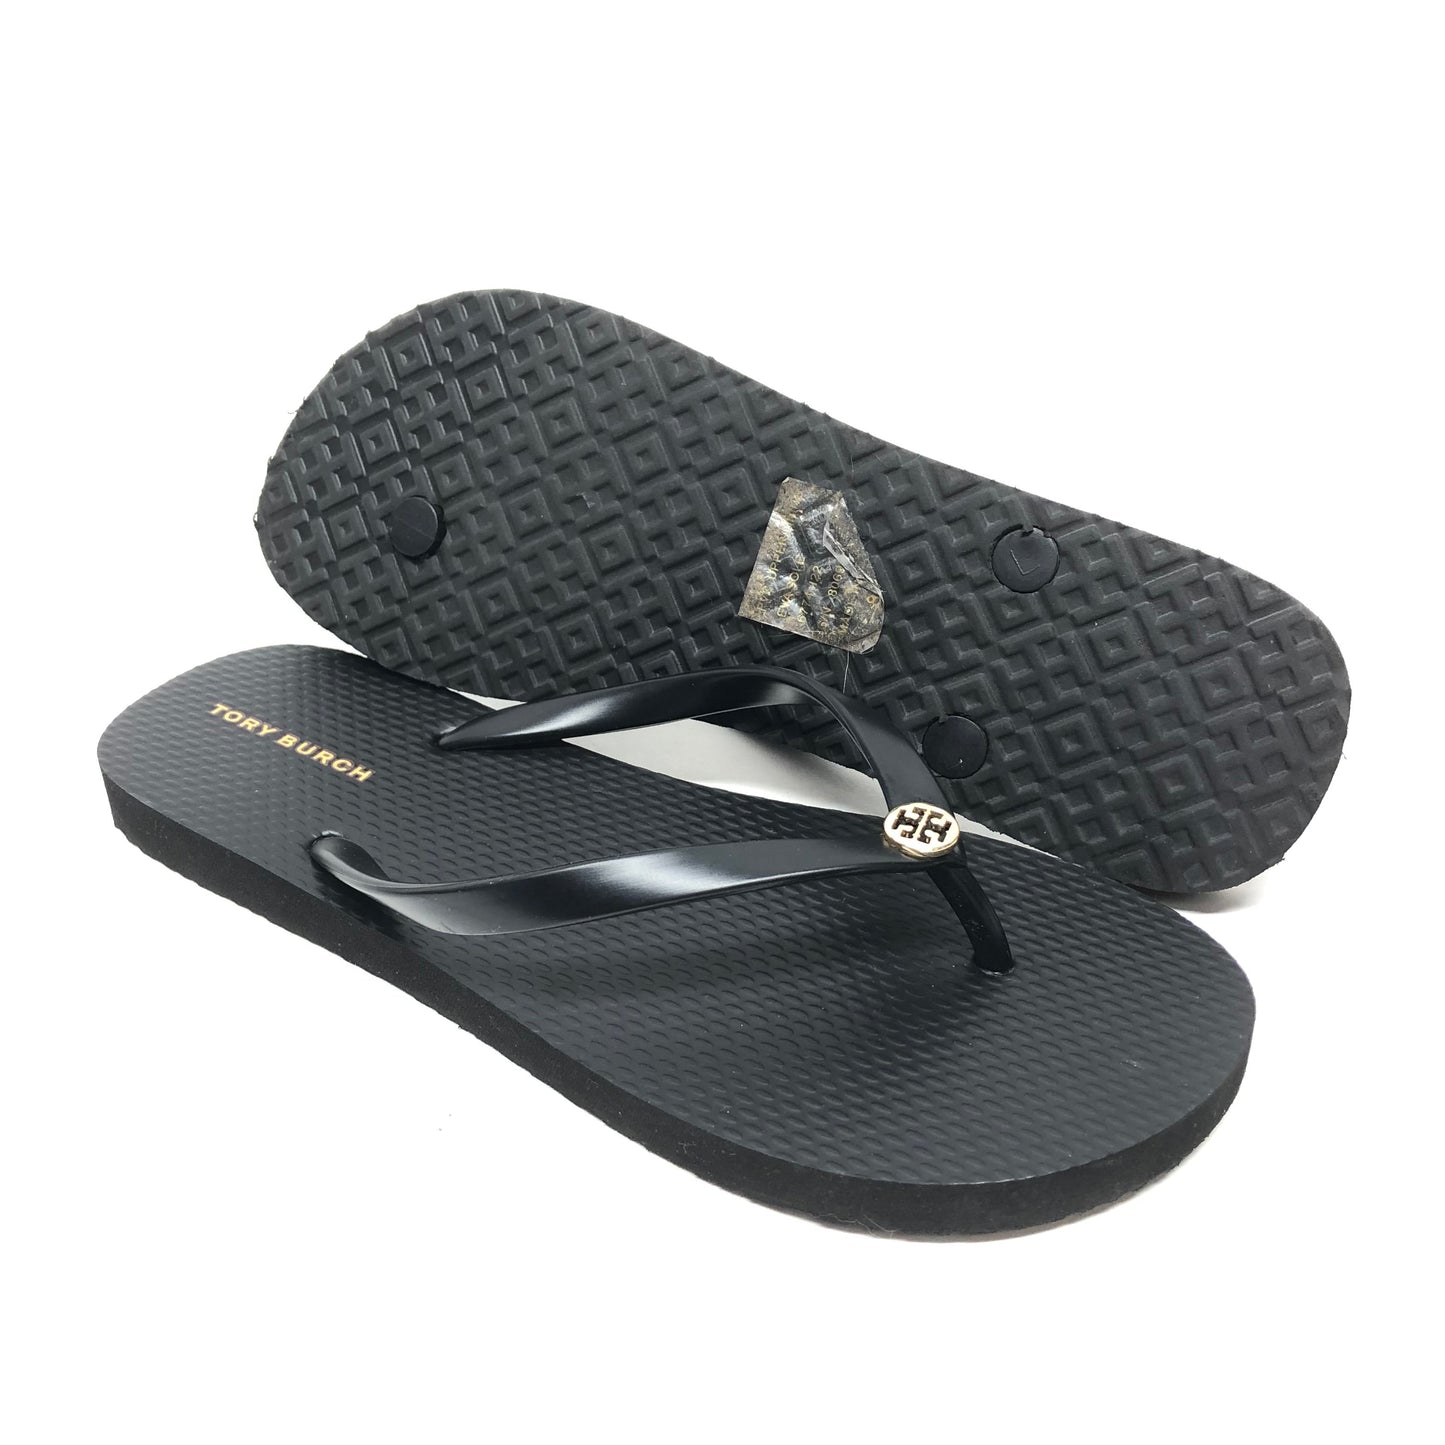 Black Sandals Flip Flops Tory Burch, Size 8